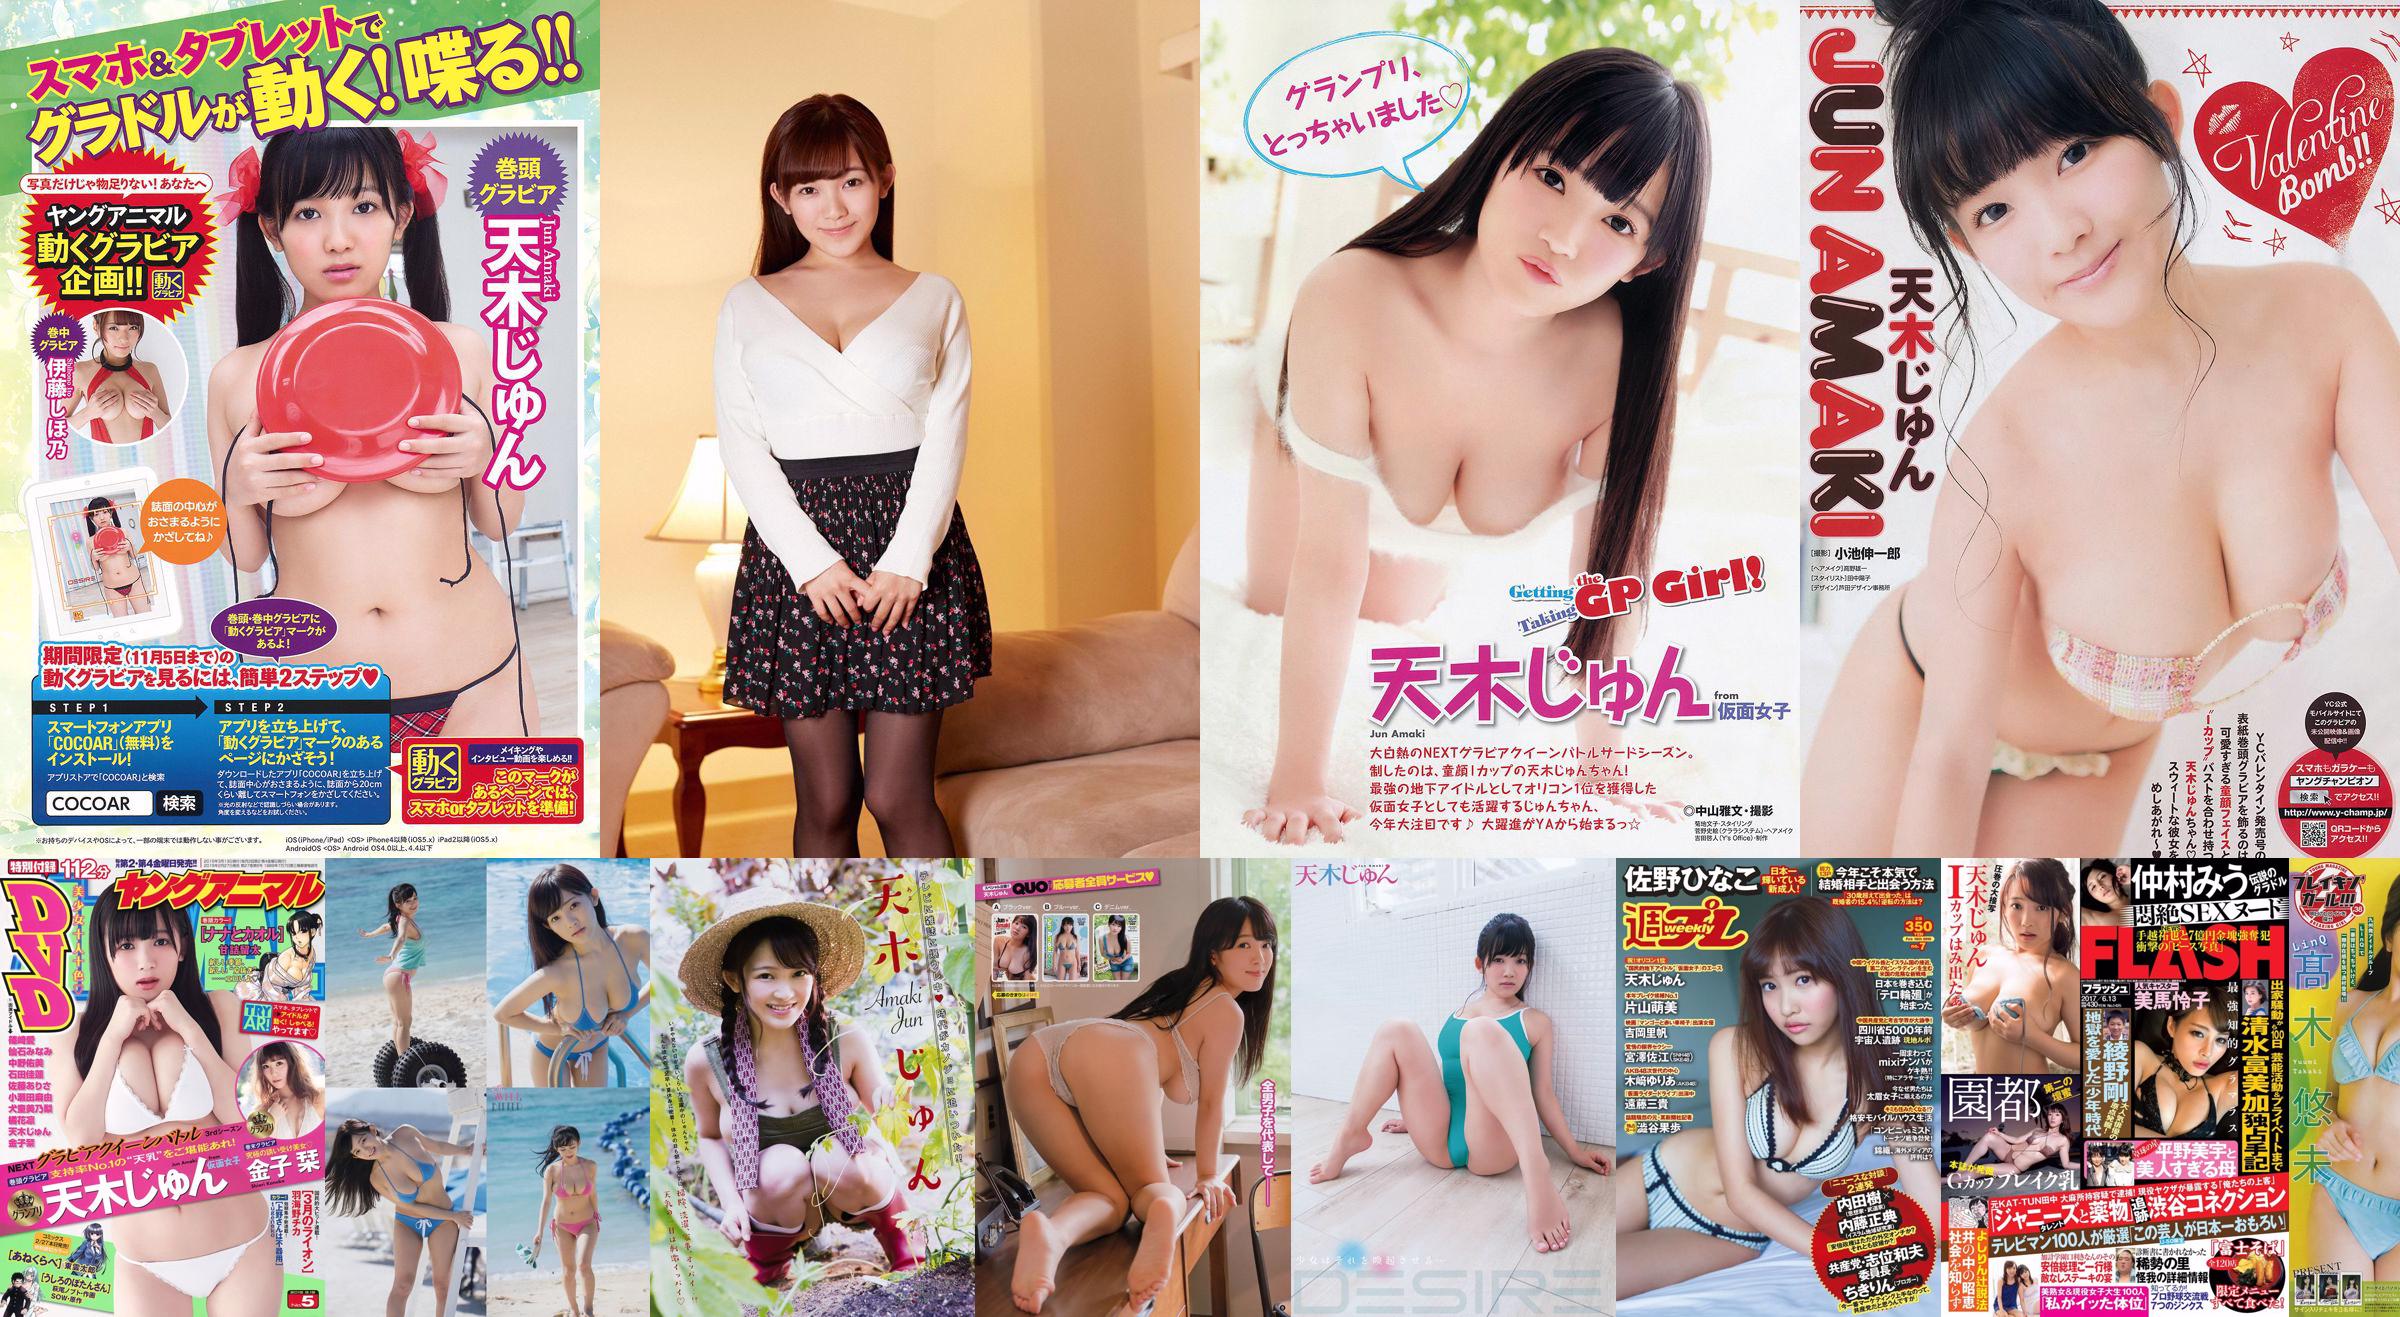 Kara Ryu il 《Shinjuku Journey Photographs》 [Beauty My Girl] VOL.254 No.a57f66 Page 1